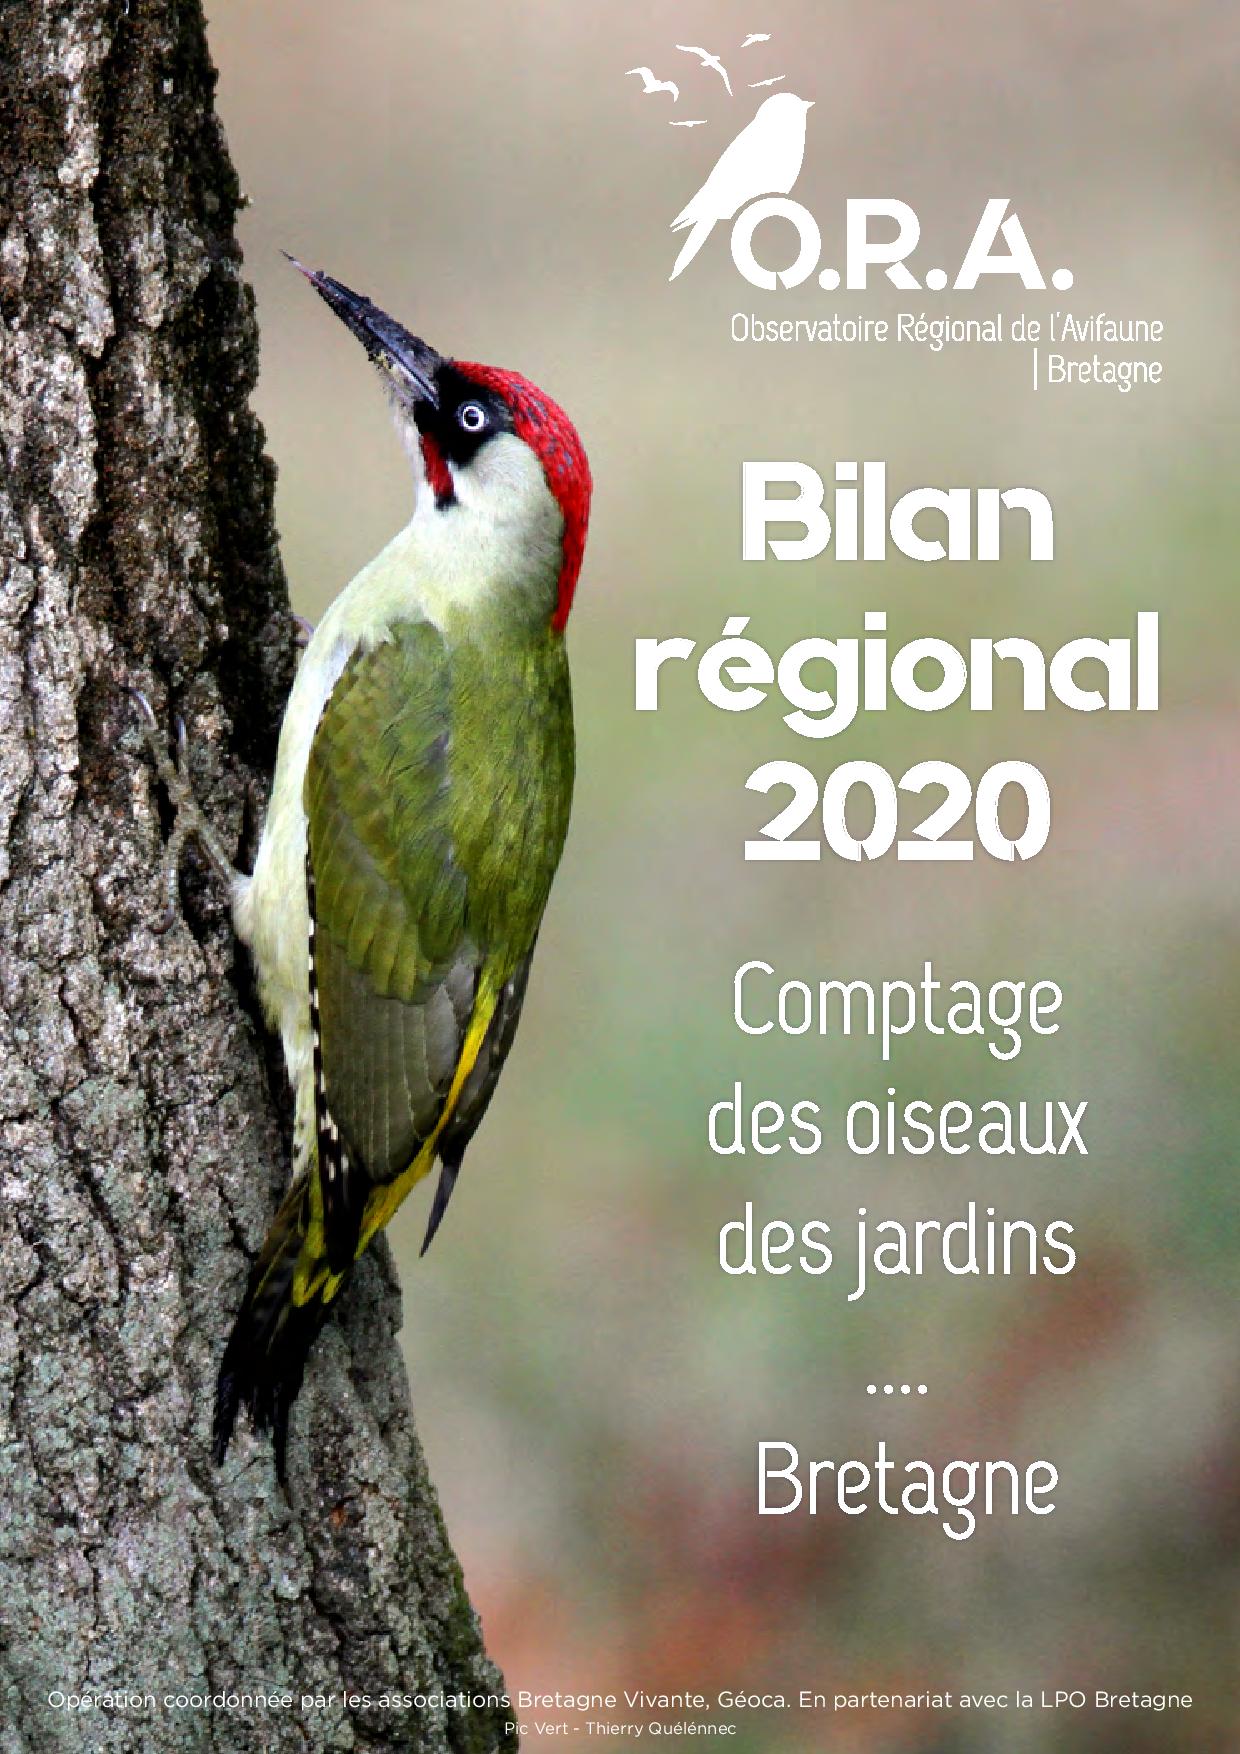 Bilan_2020_Bretagne_Oiseaux_des_jardins-page-001.jpg